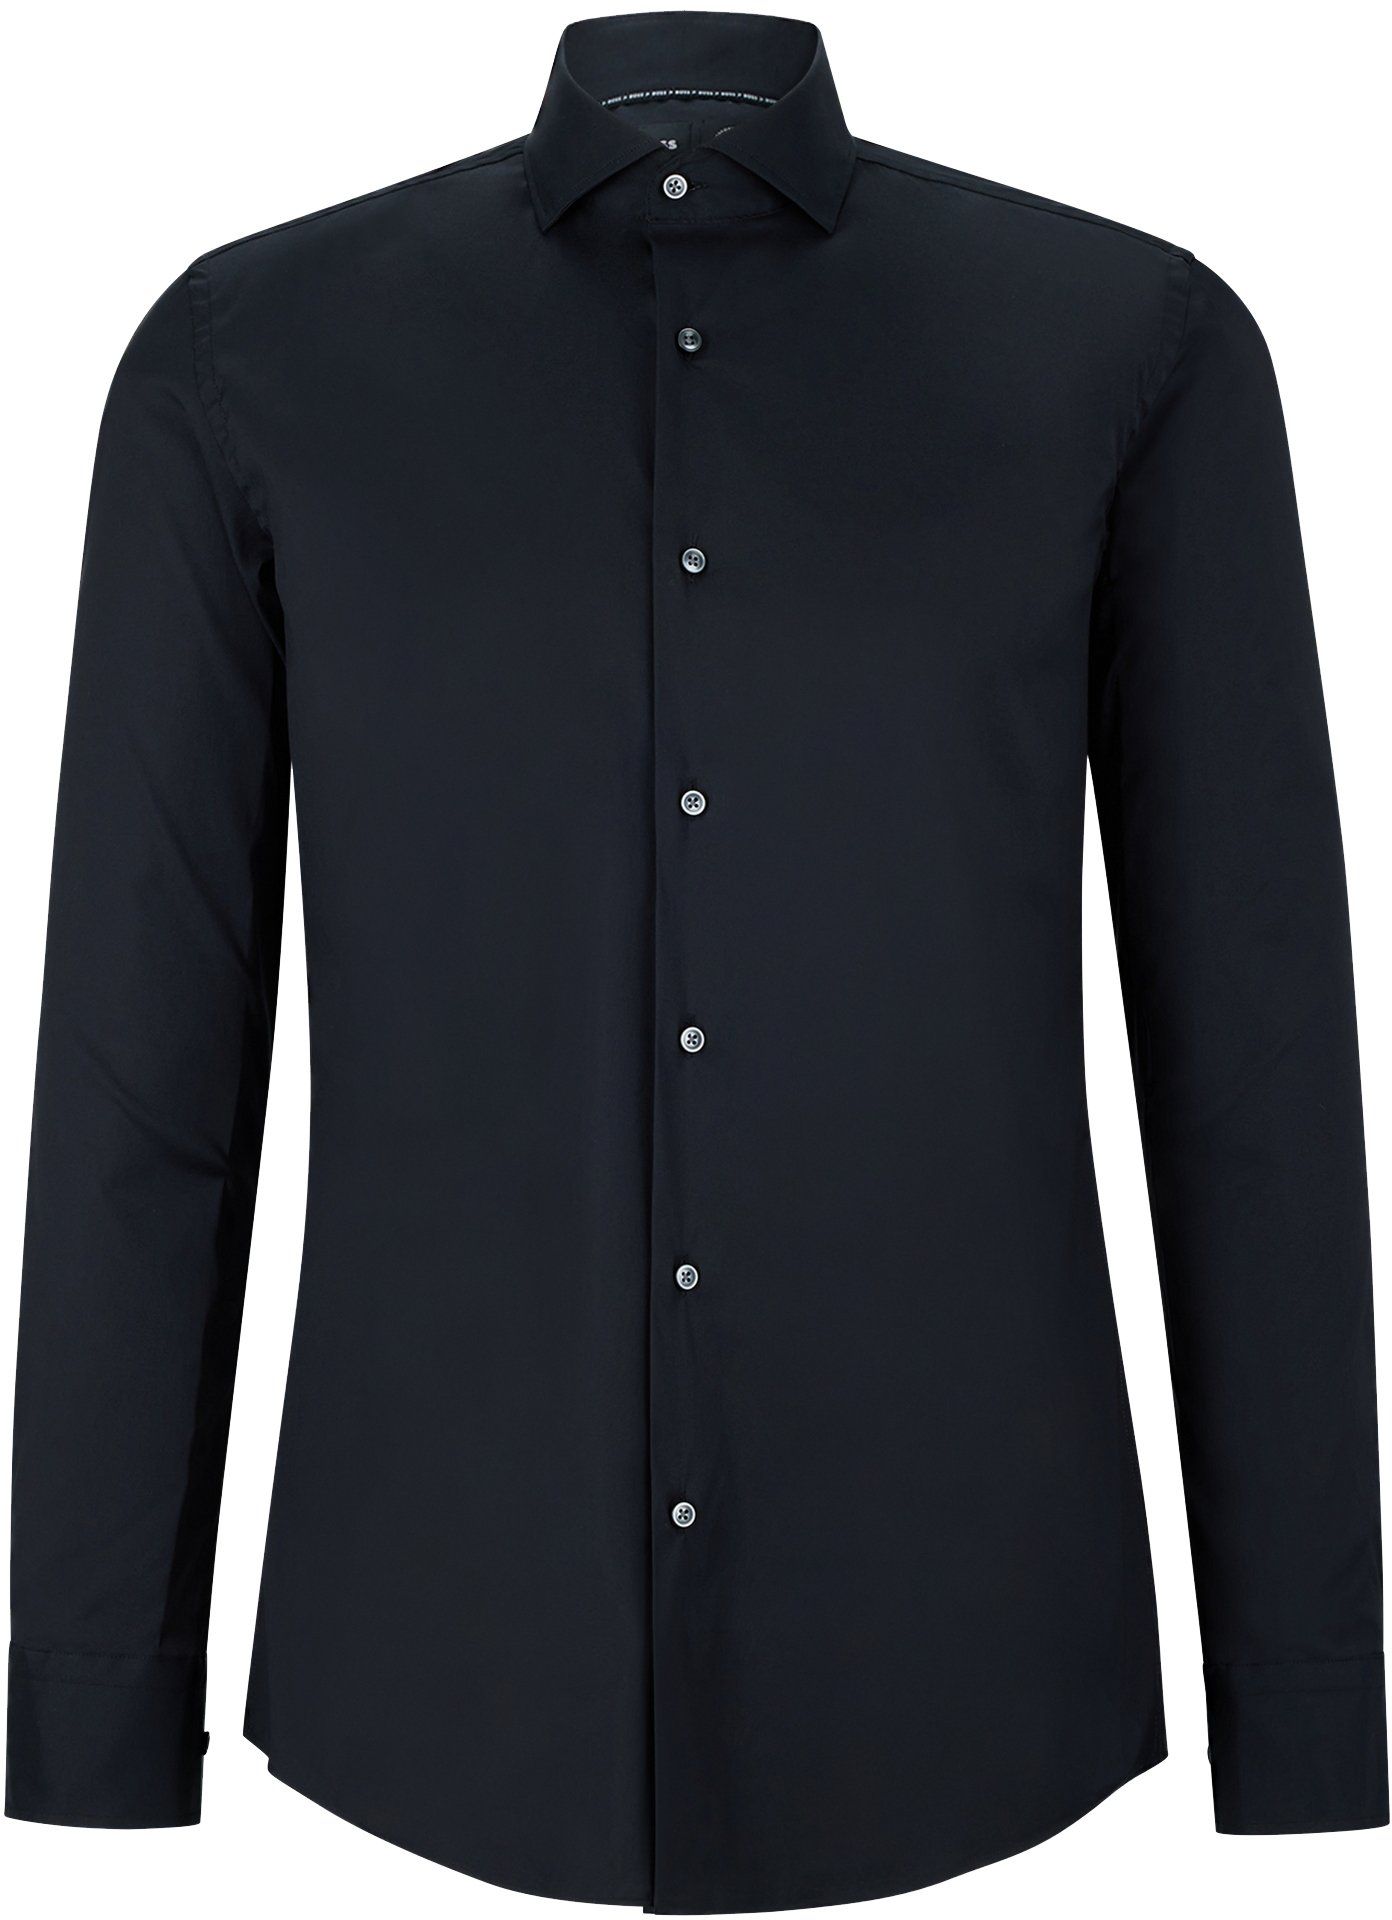 Hugo Boss Hank Shirt Black size 15 1/2